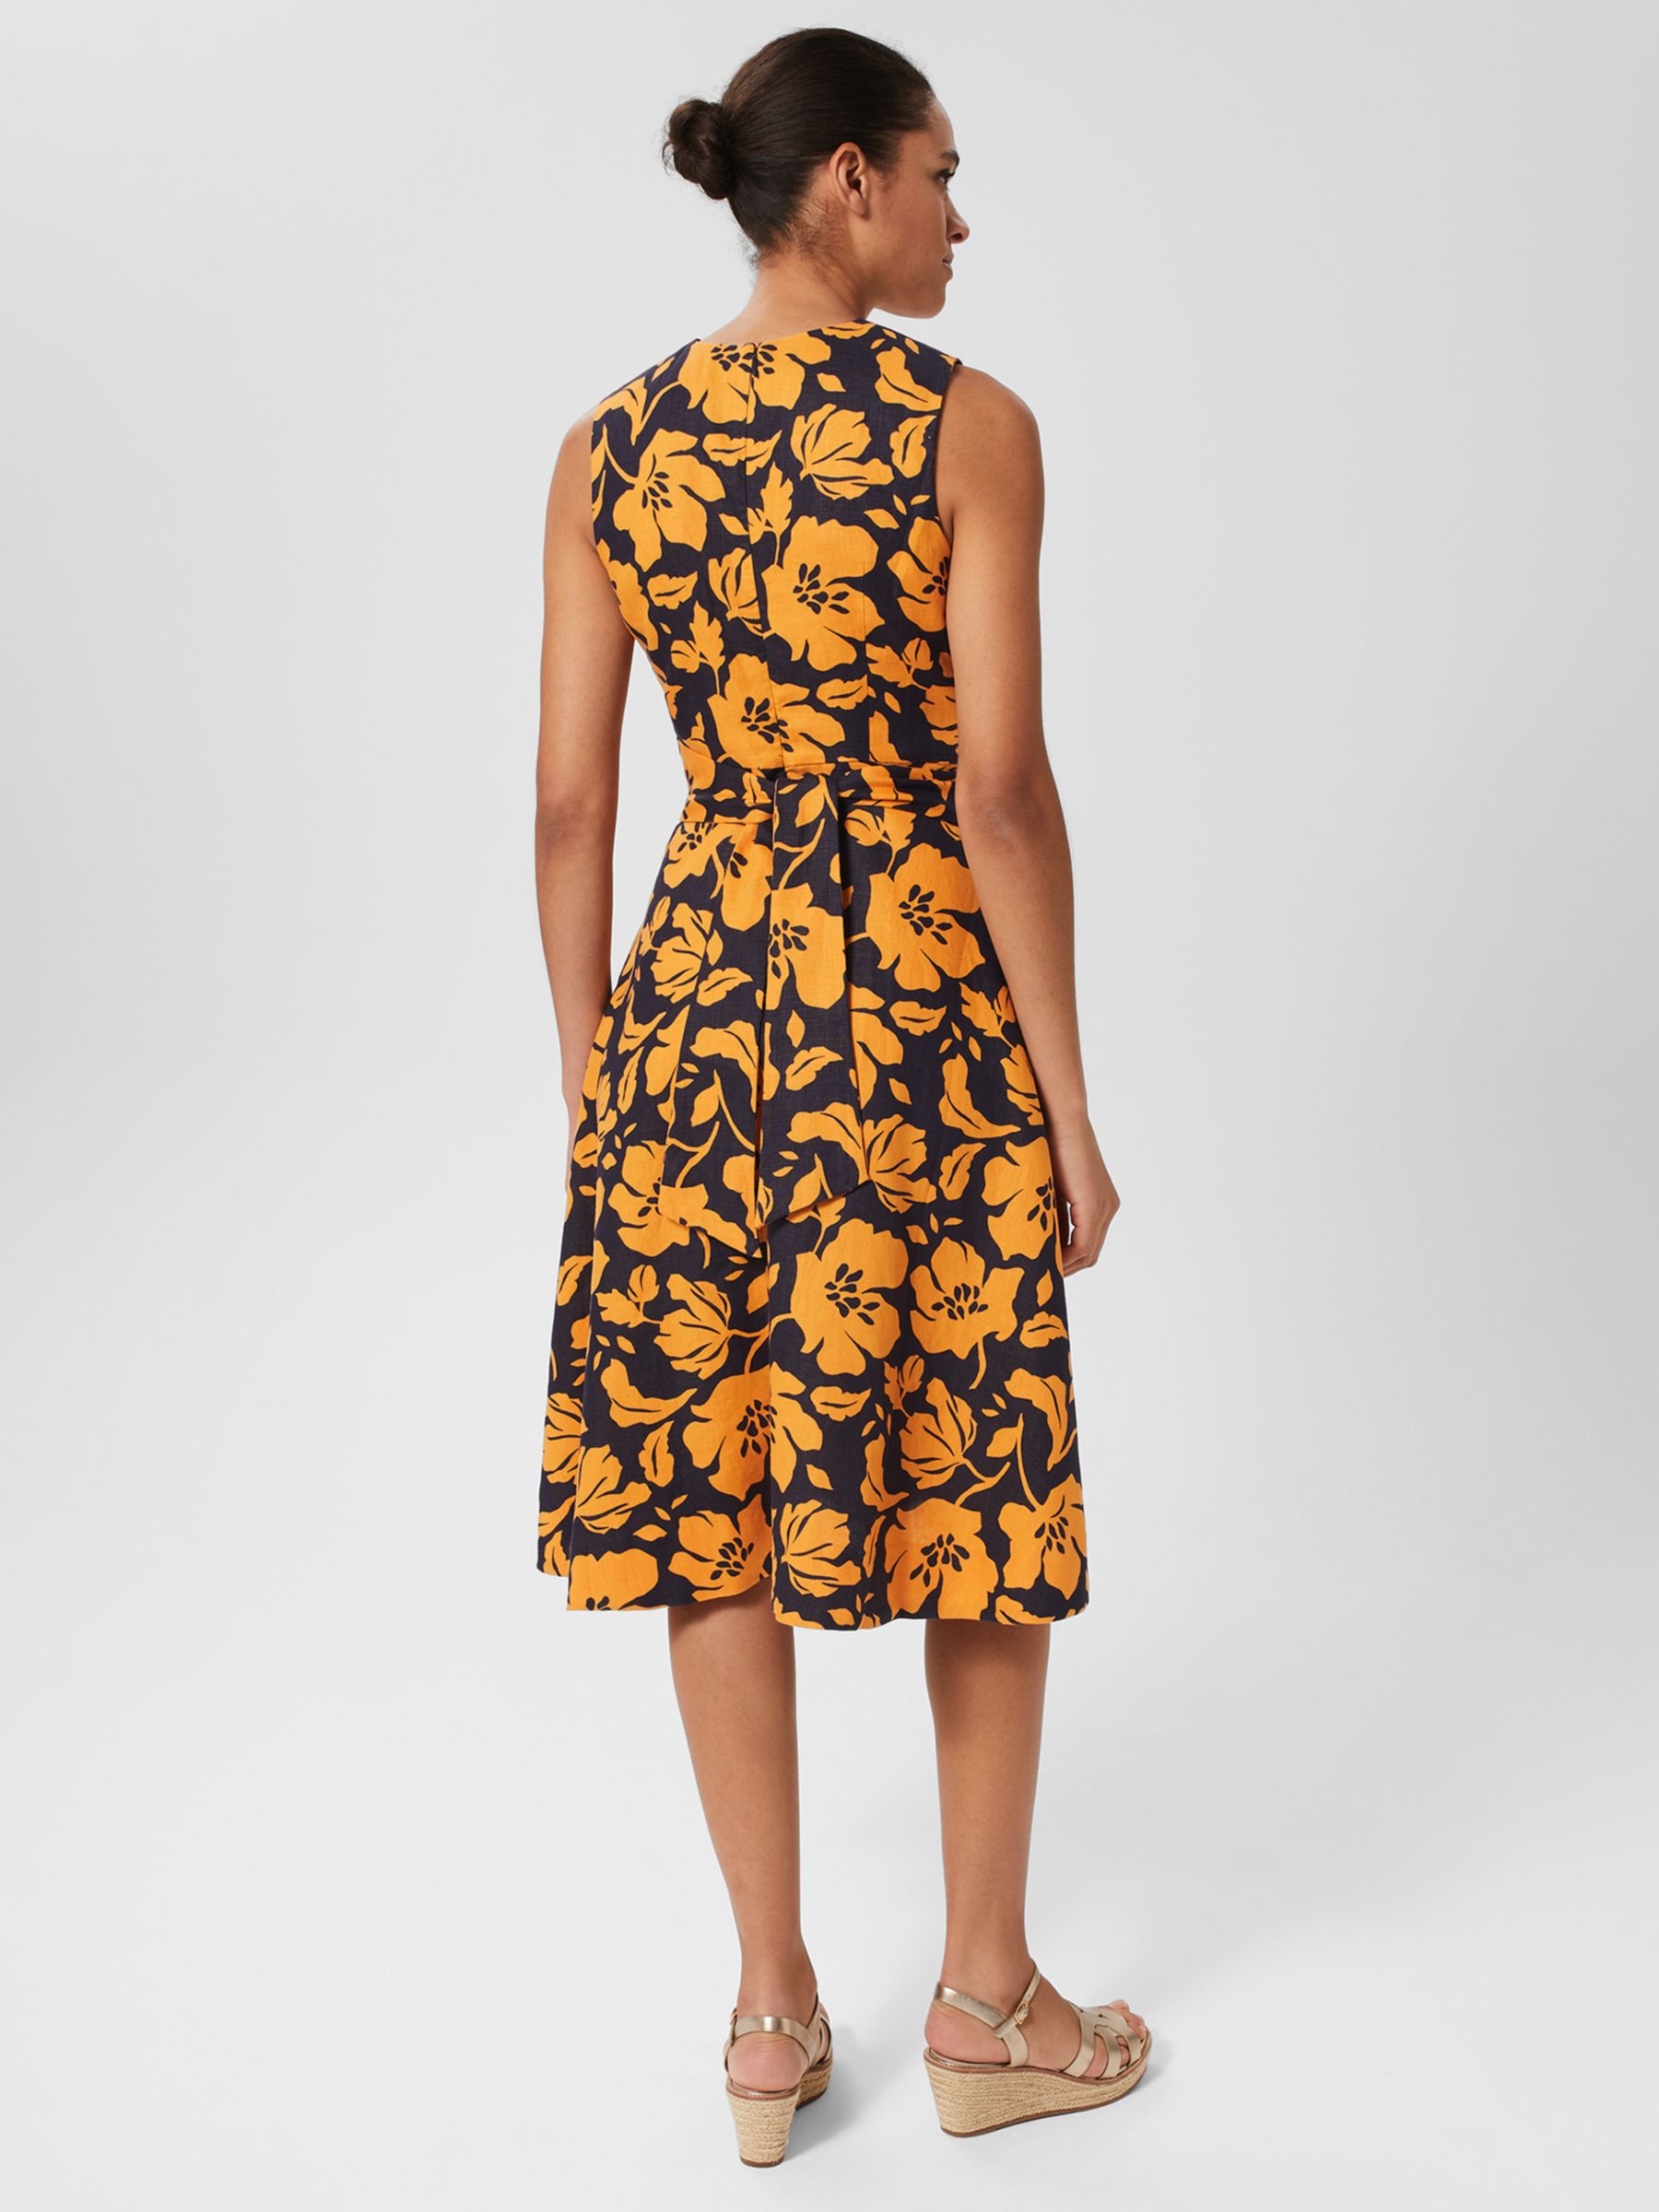 Hobbs Twitchill Floral Print Dress, Orange/Navy at John Lewis & Partners